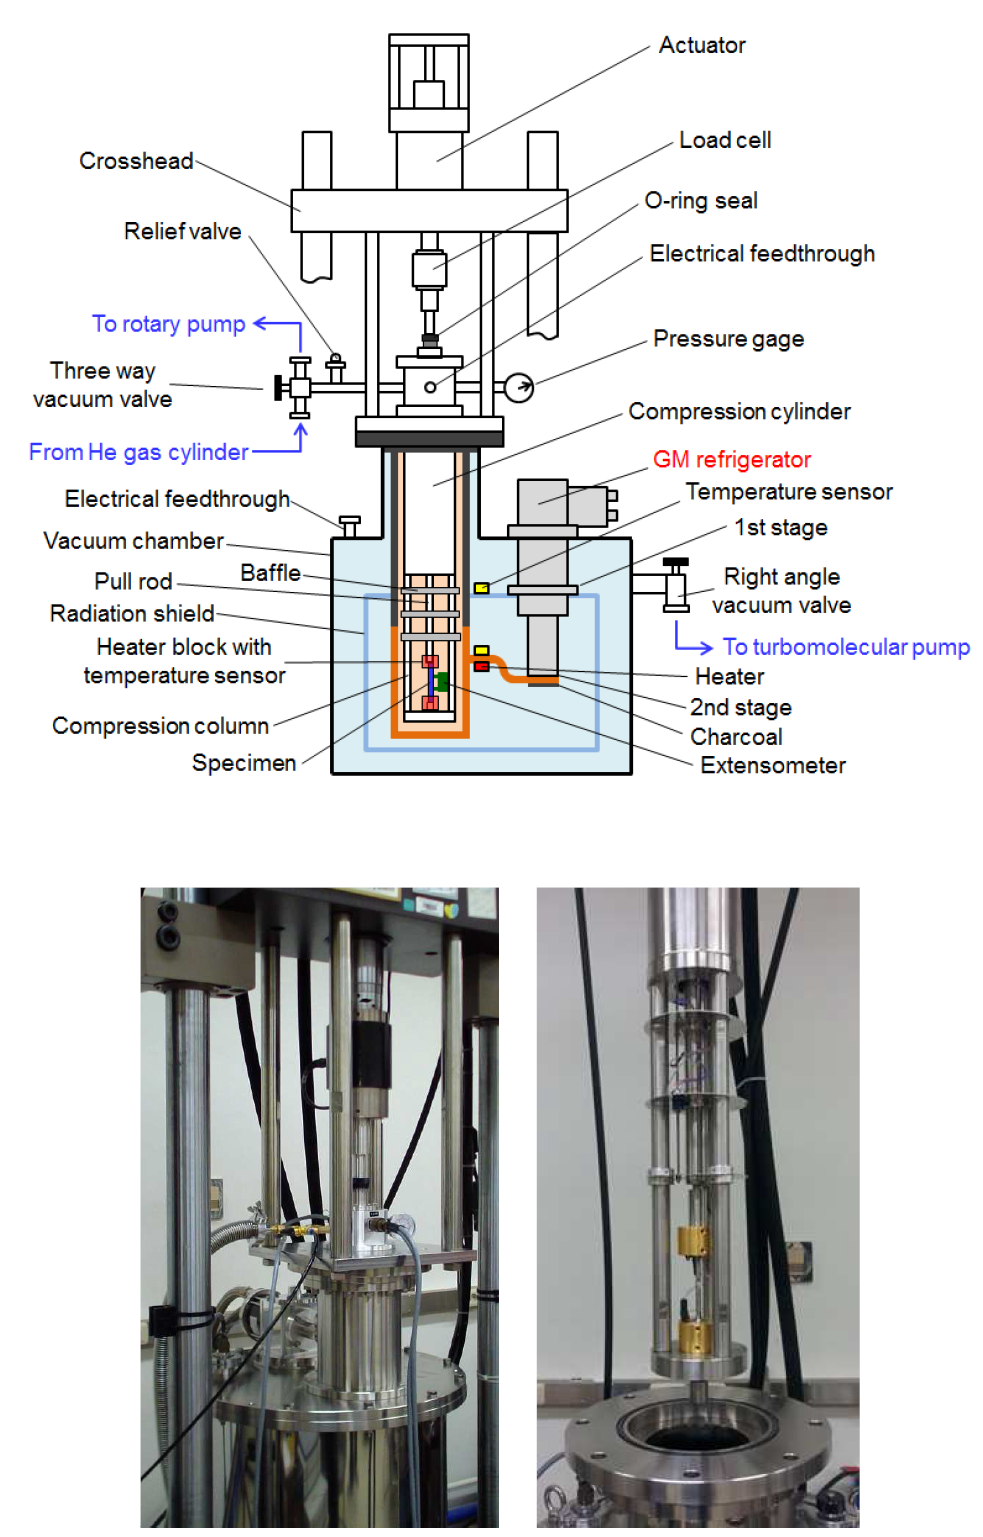 Mechanical testing cryostat using a 4 K G-M refrigerator